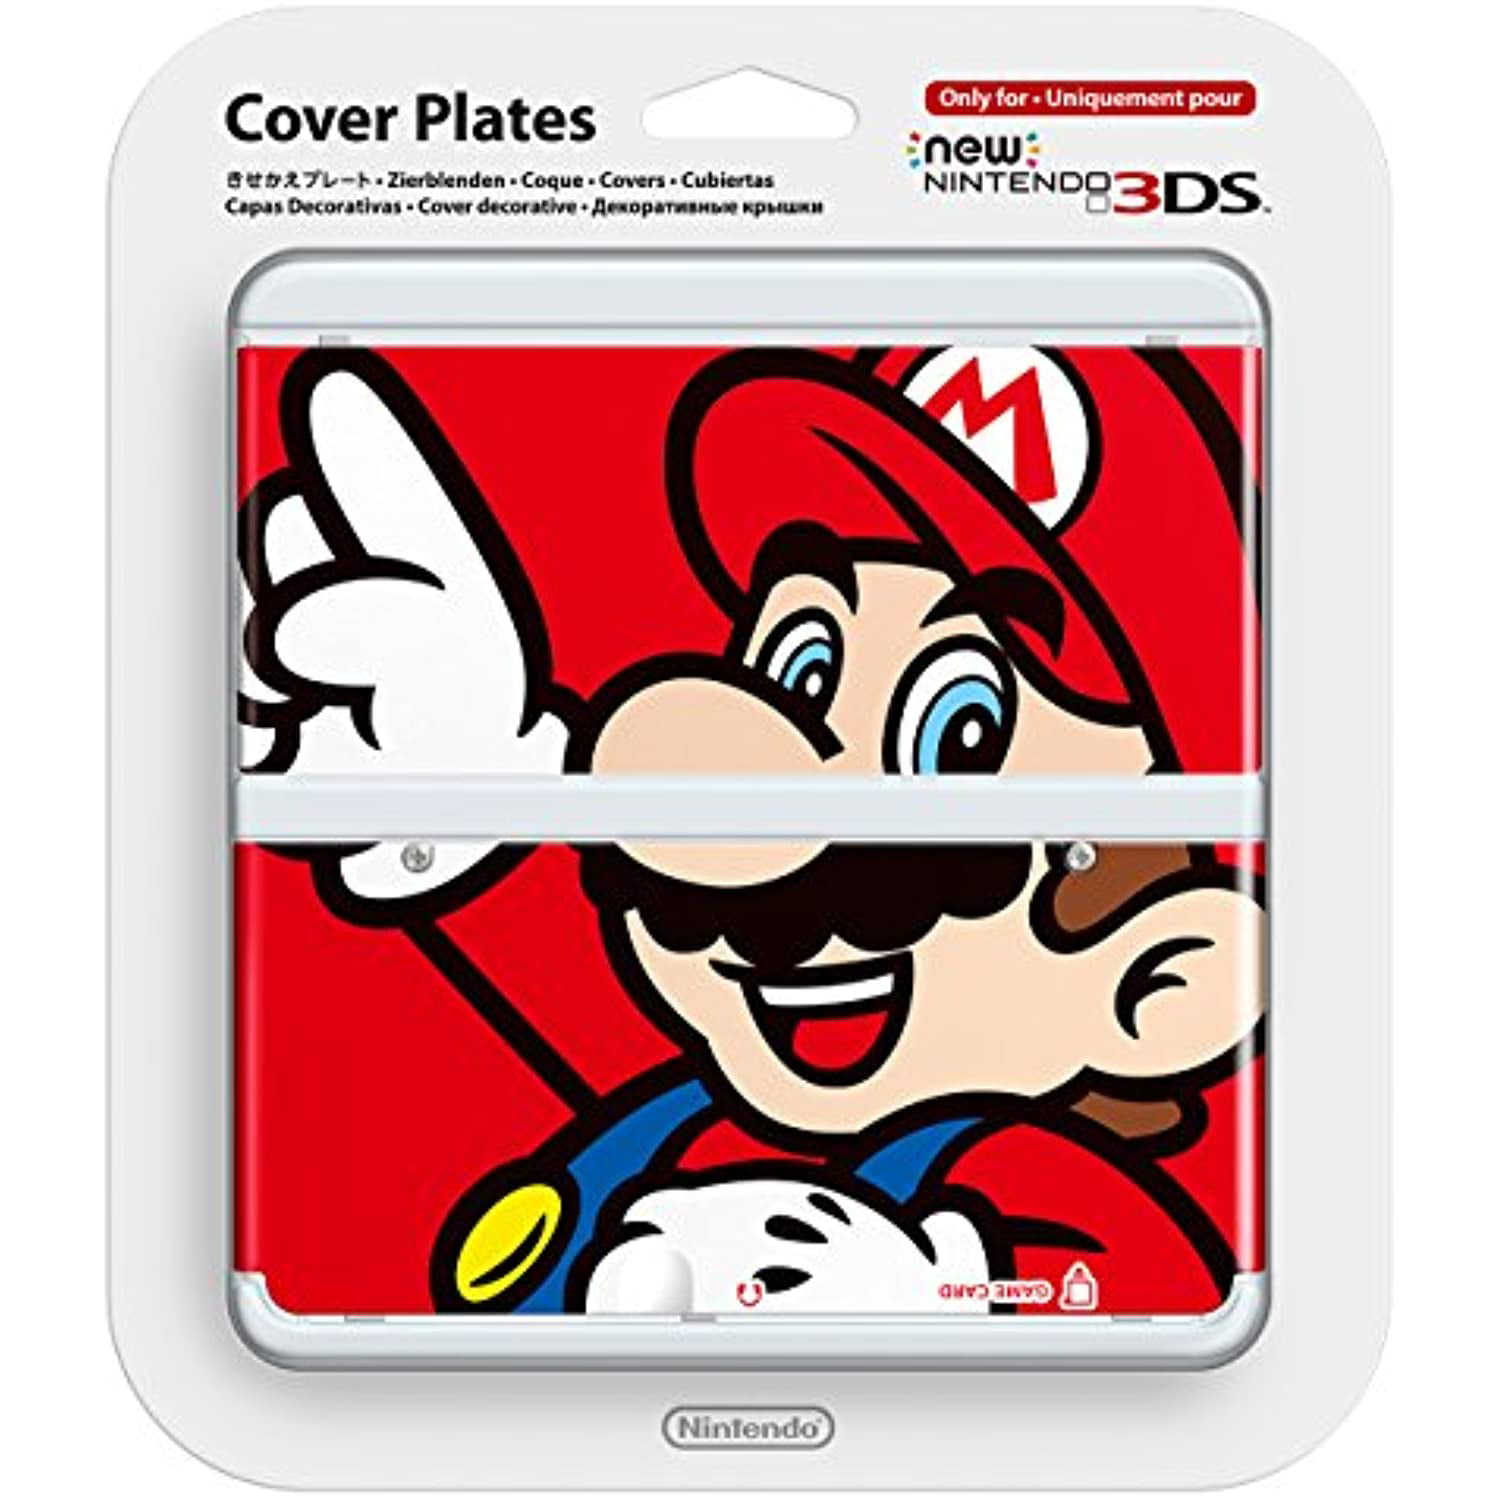 Onkel eller Mister åbenbaring Slægtsforskning New Nintendo 3Ds Cover Plates Mario Only For Nintendo New 3Ds Japan Import  - Walmart.com